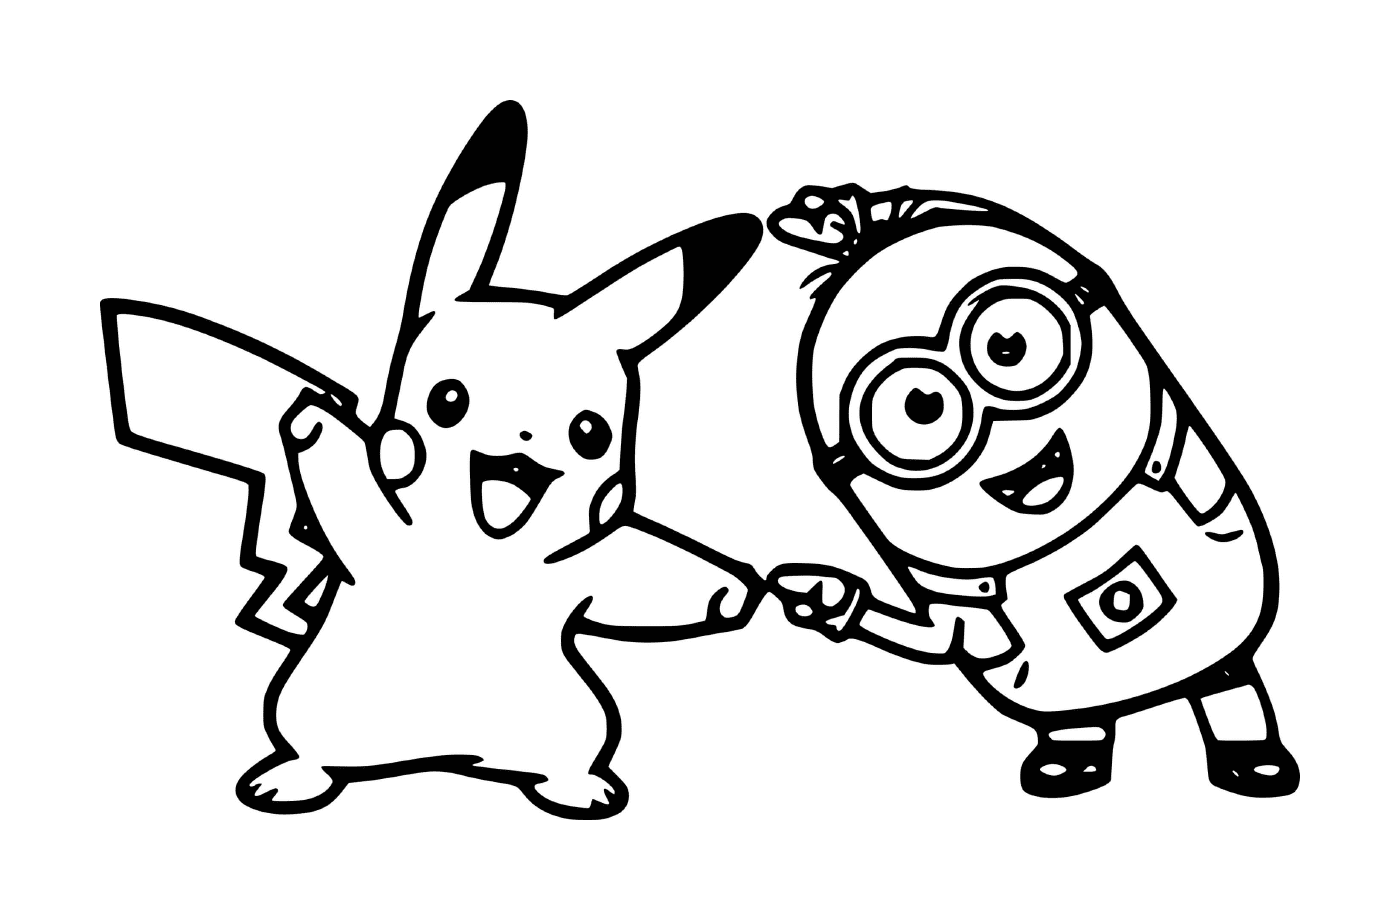  Minion e Pikachu insieme 